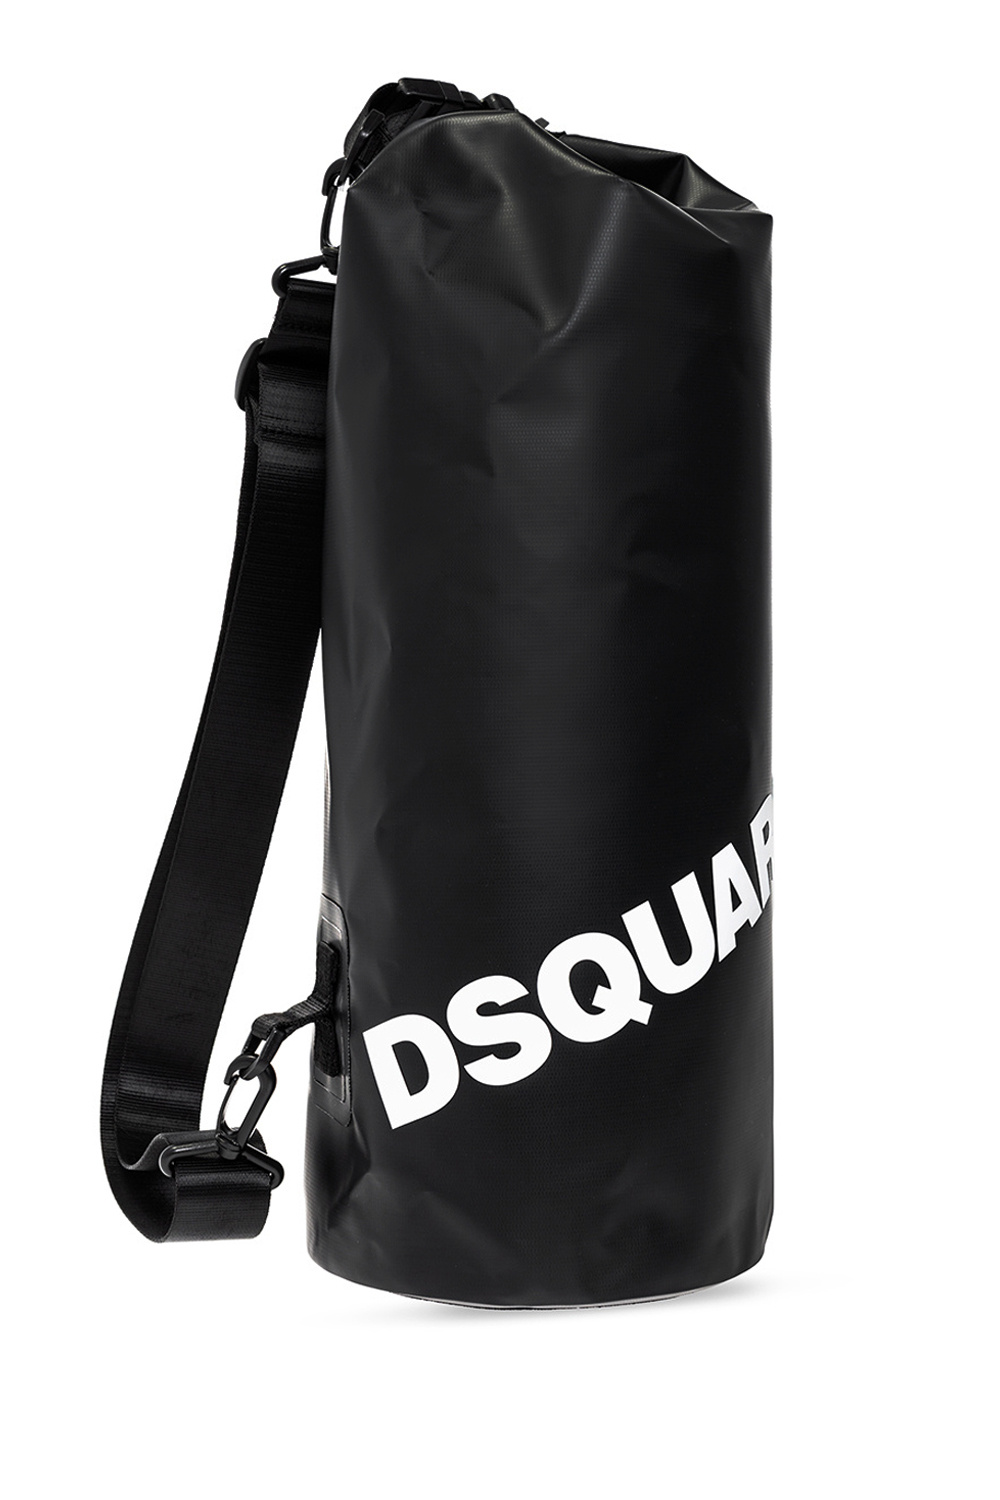 Dsquared2 adidas Adventure belt bag